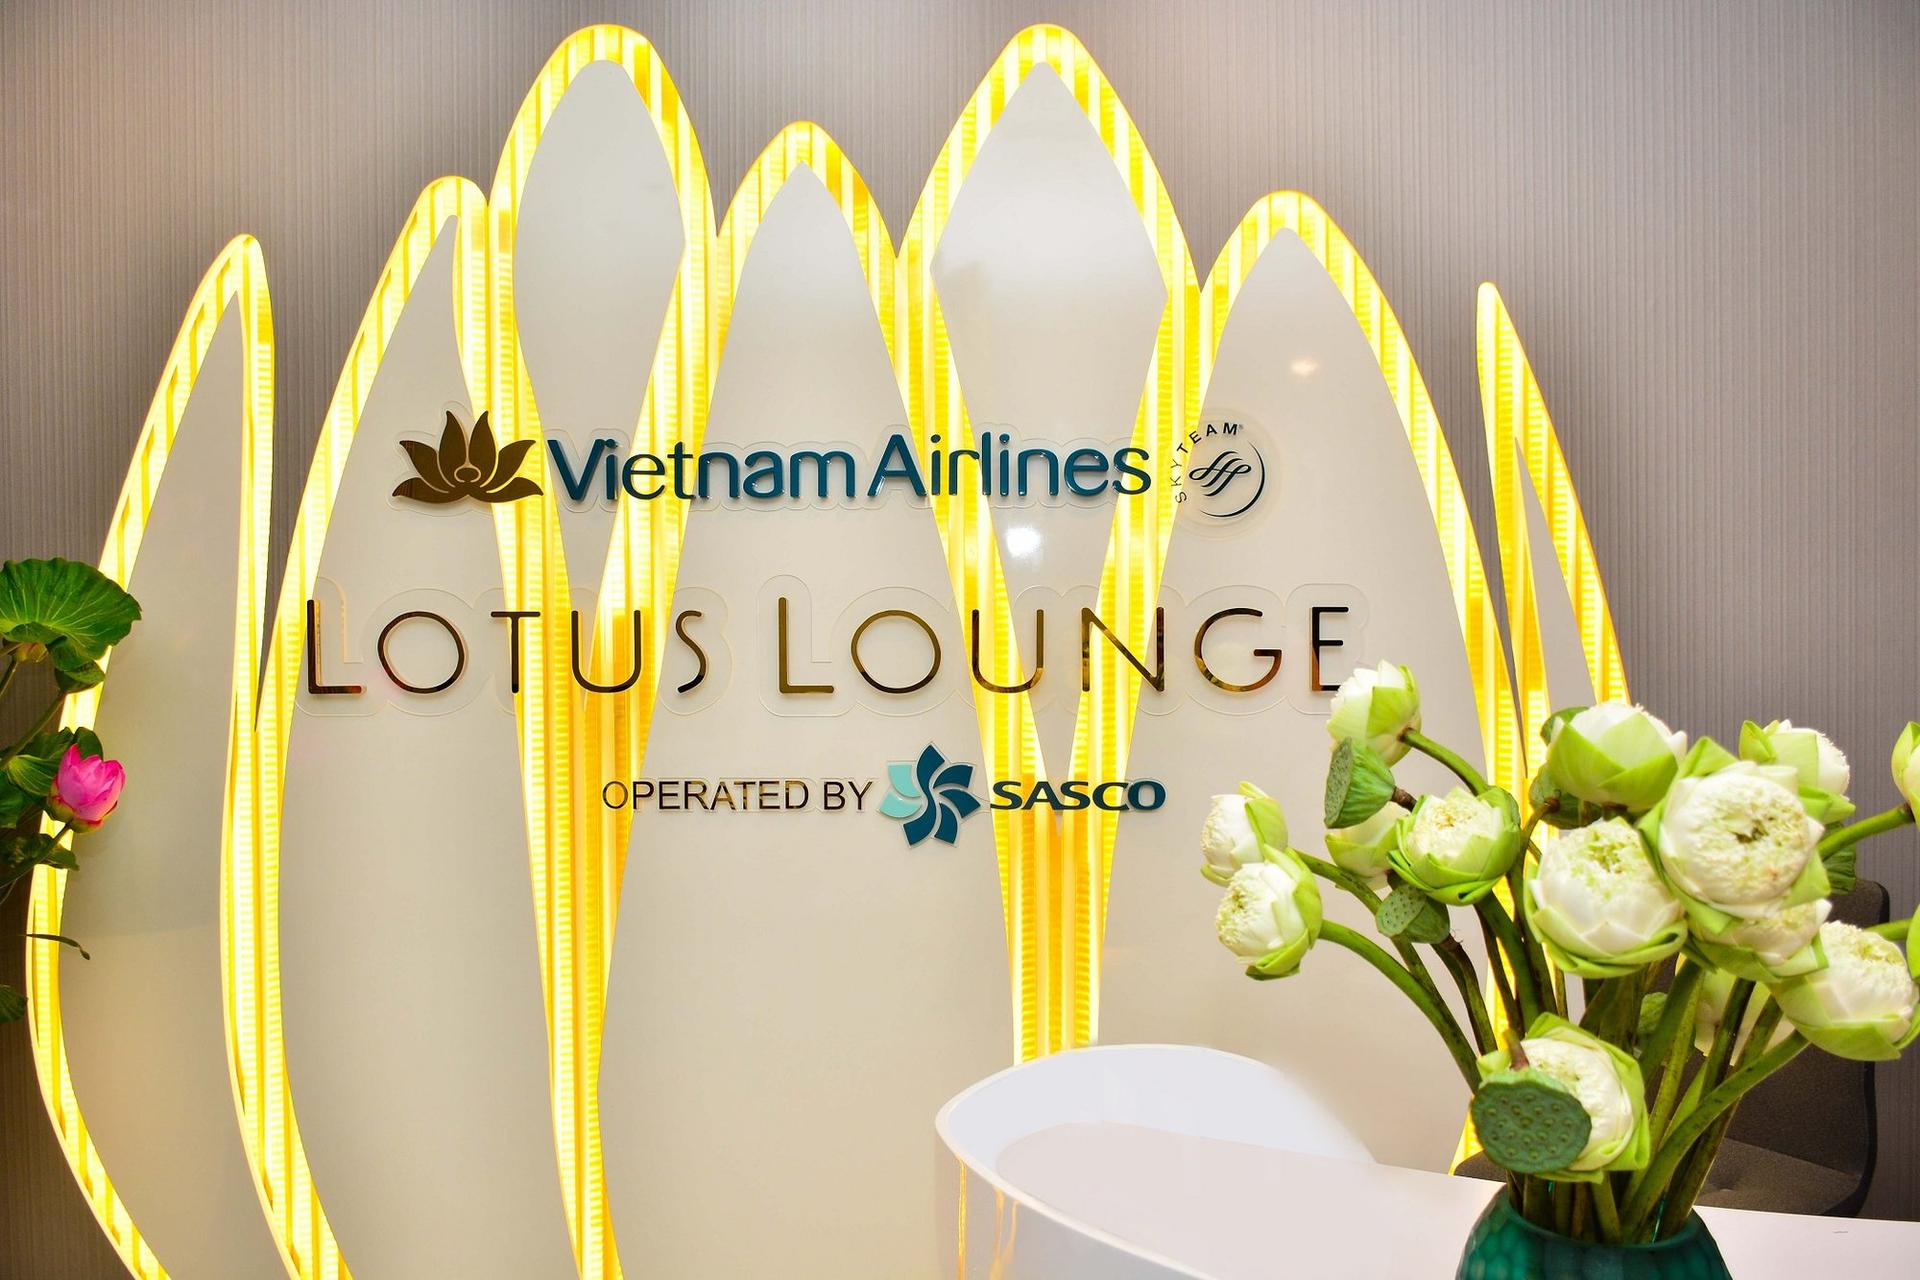 Vietnam Airlines Lotus Lounge image 6 of 12